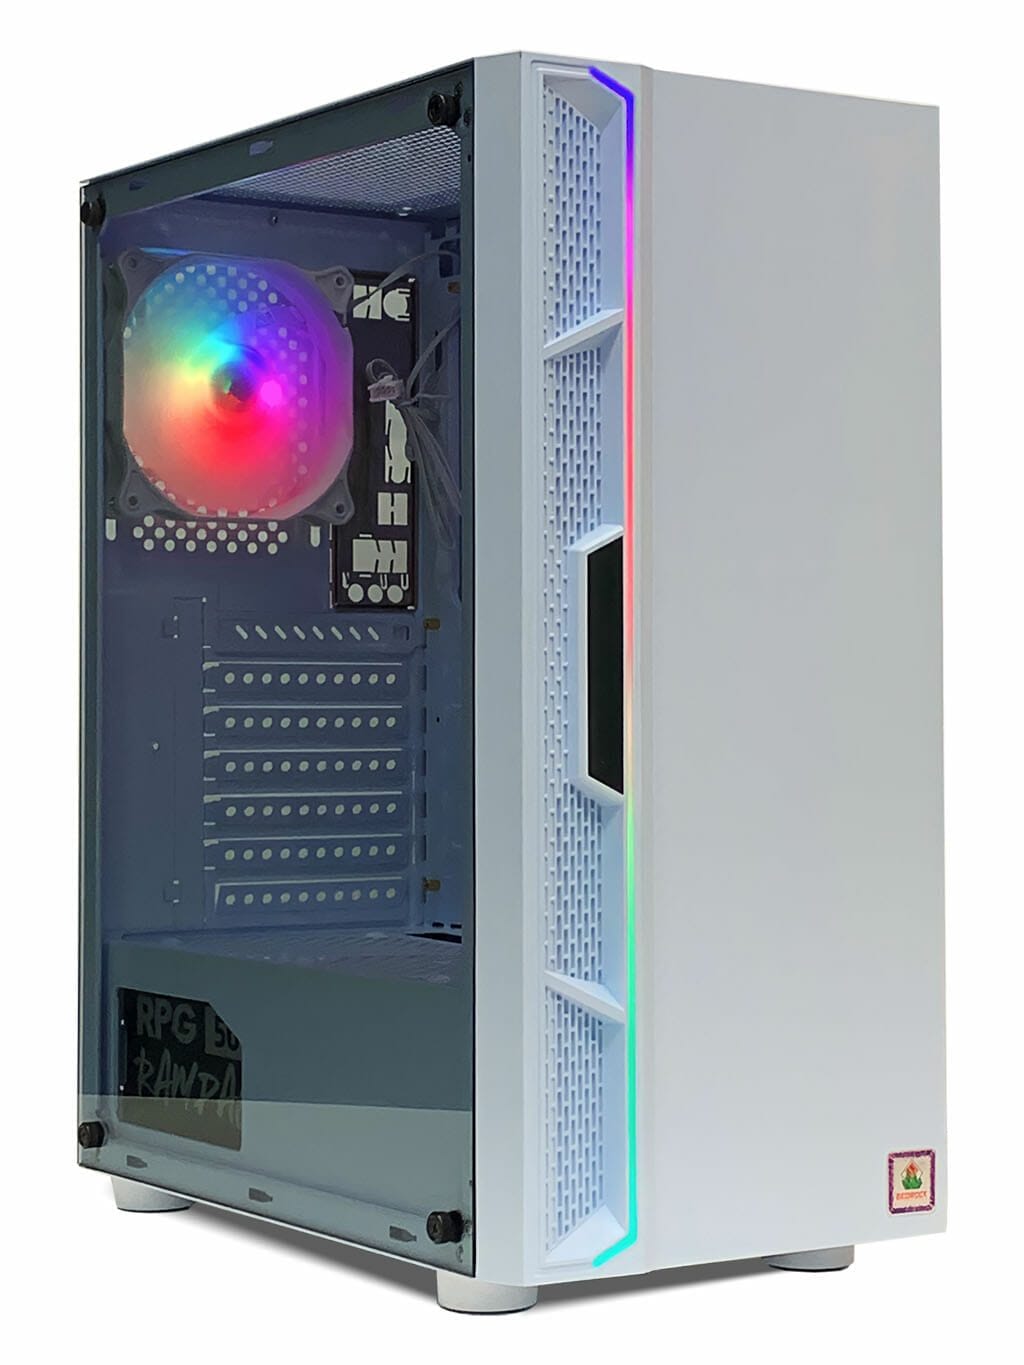 Skyline Gaming PC - Nvidia GTX 970 4GB - Intel i5 4590 / i5 6500 CPU - 12GB  RAM - 500W Bronze PSU